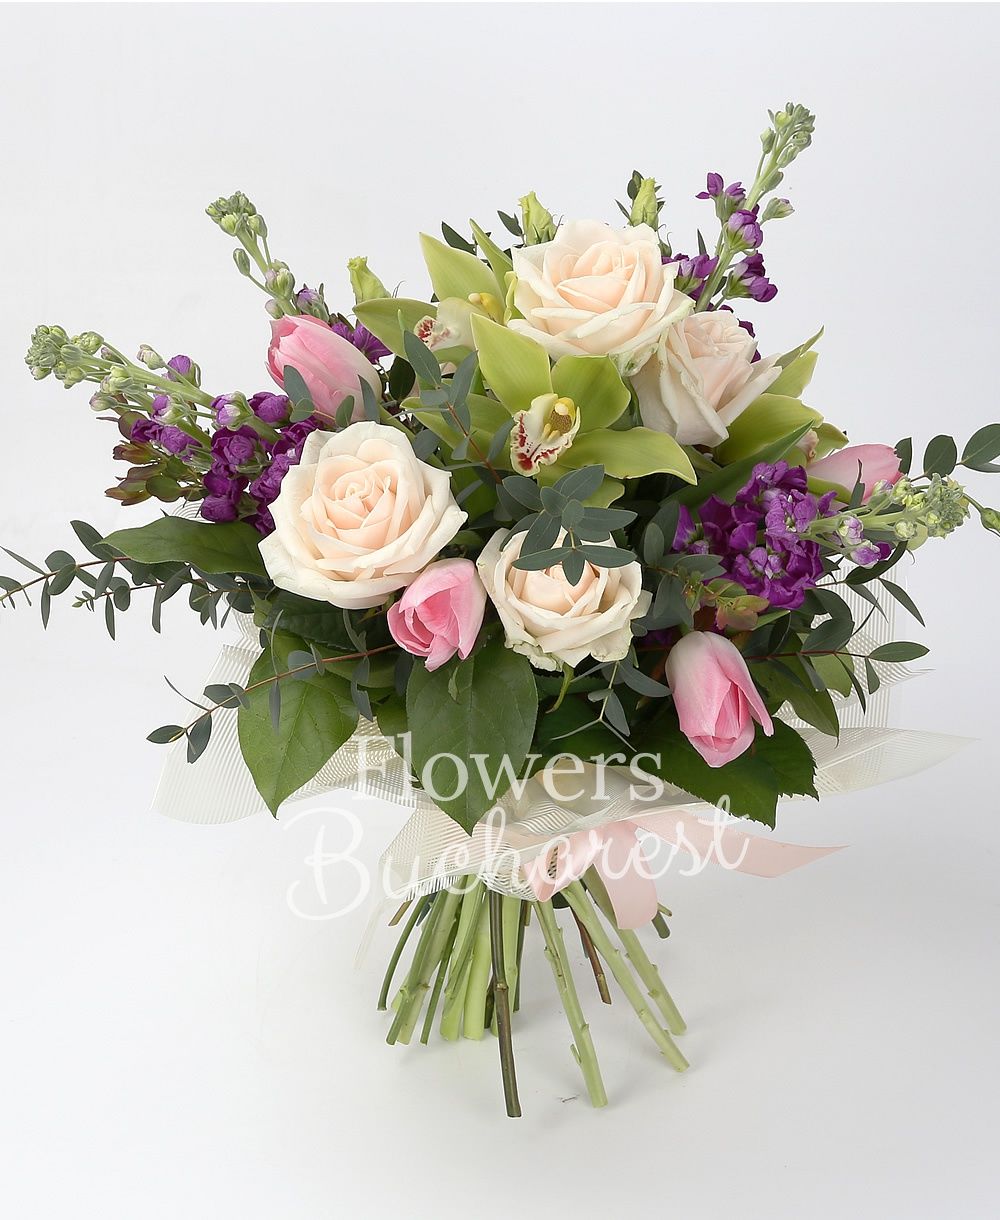 5 cream roses, 5 mauve matthiola, 5 pink tulips, 2 pink lisianthus, green cymbidium, greenery